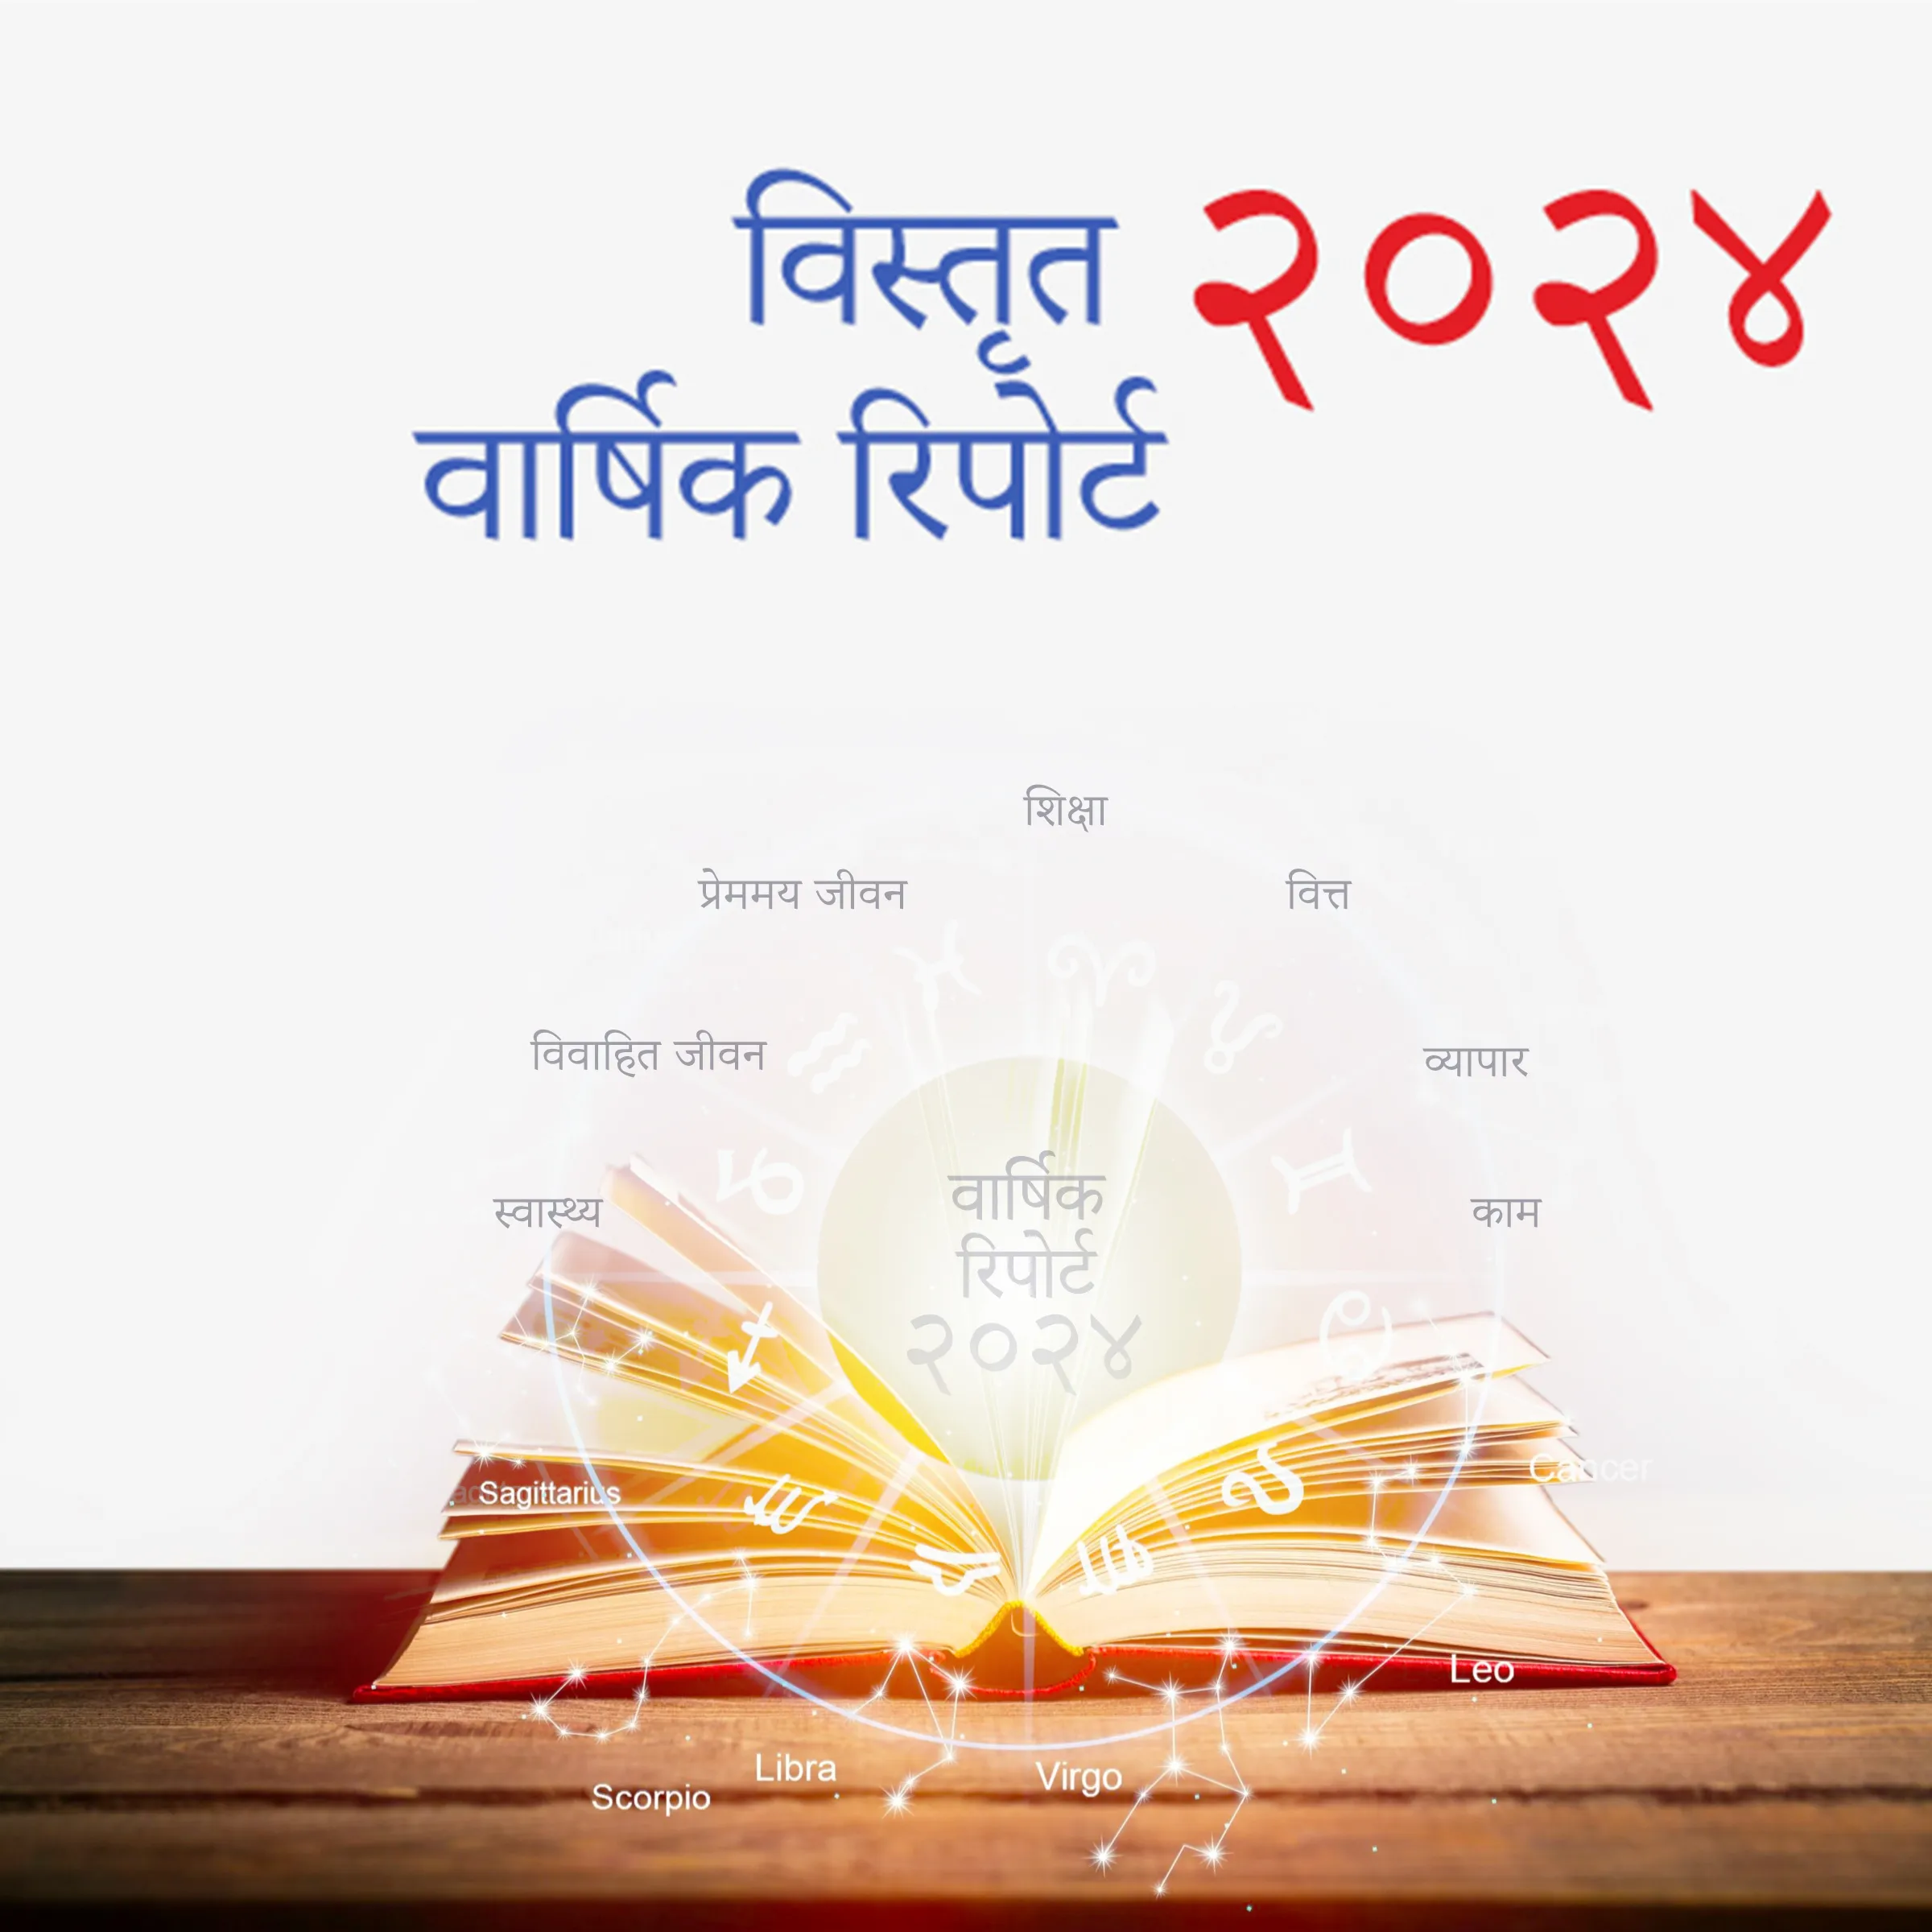 २०२४ विस्तृत वार्षिक रिपोर्ट – Acharya Shandilya